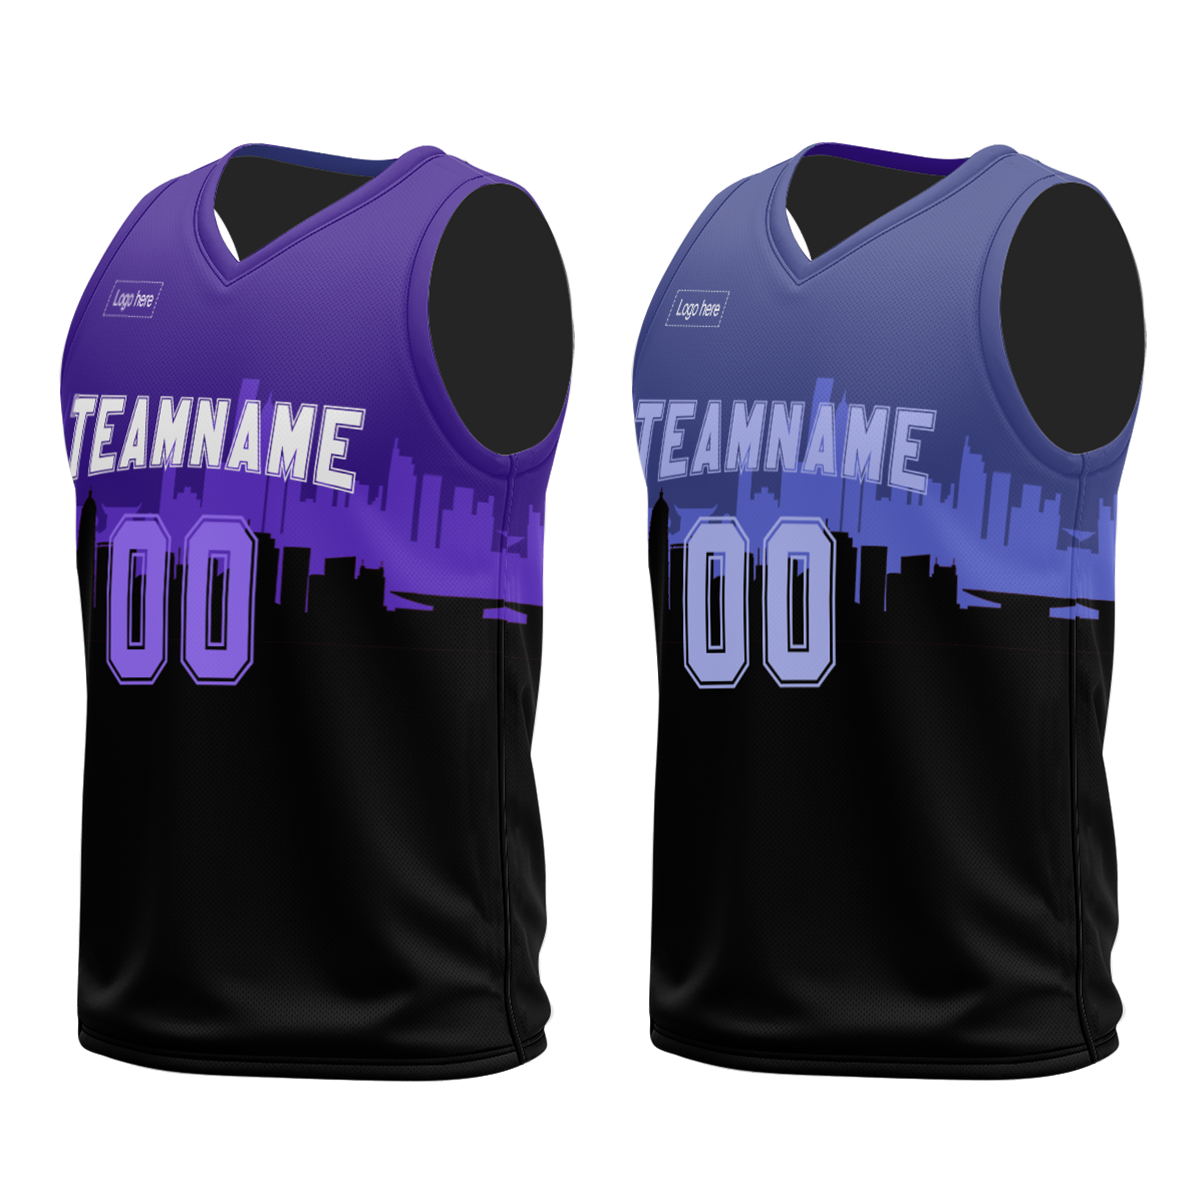 high-quality-unique-basketball-jersey-pattern-design-full-sublimation-digital-printing-oem-service-basketball-uniform-at-cj-pod-5